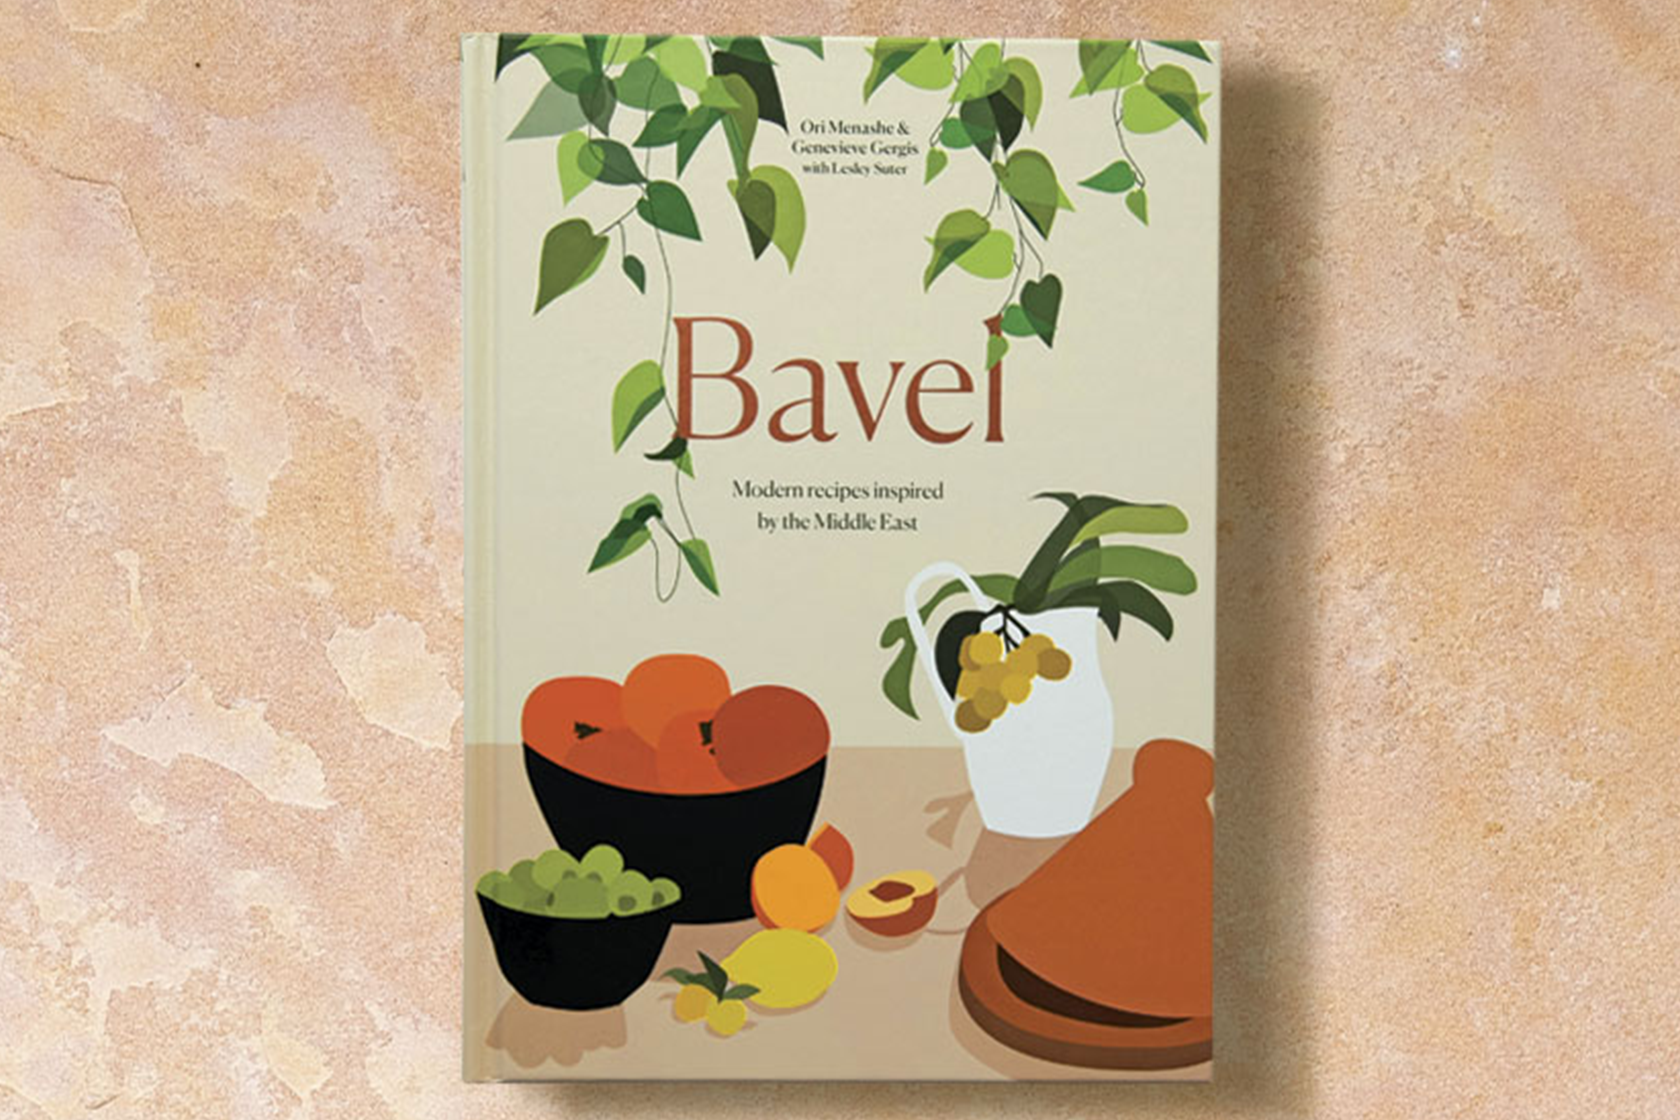 The Bavel Cookbook